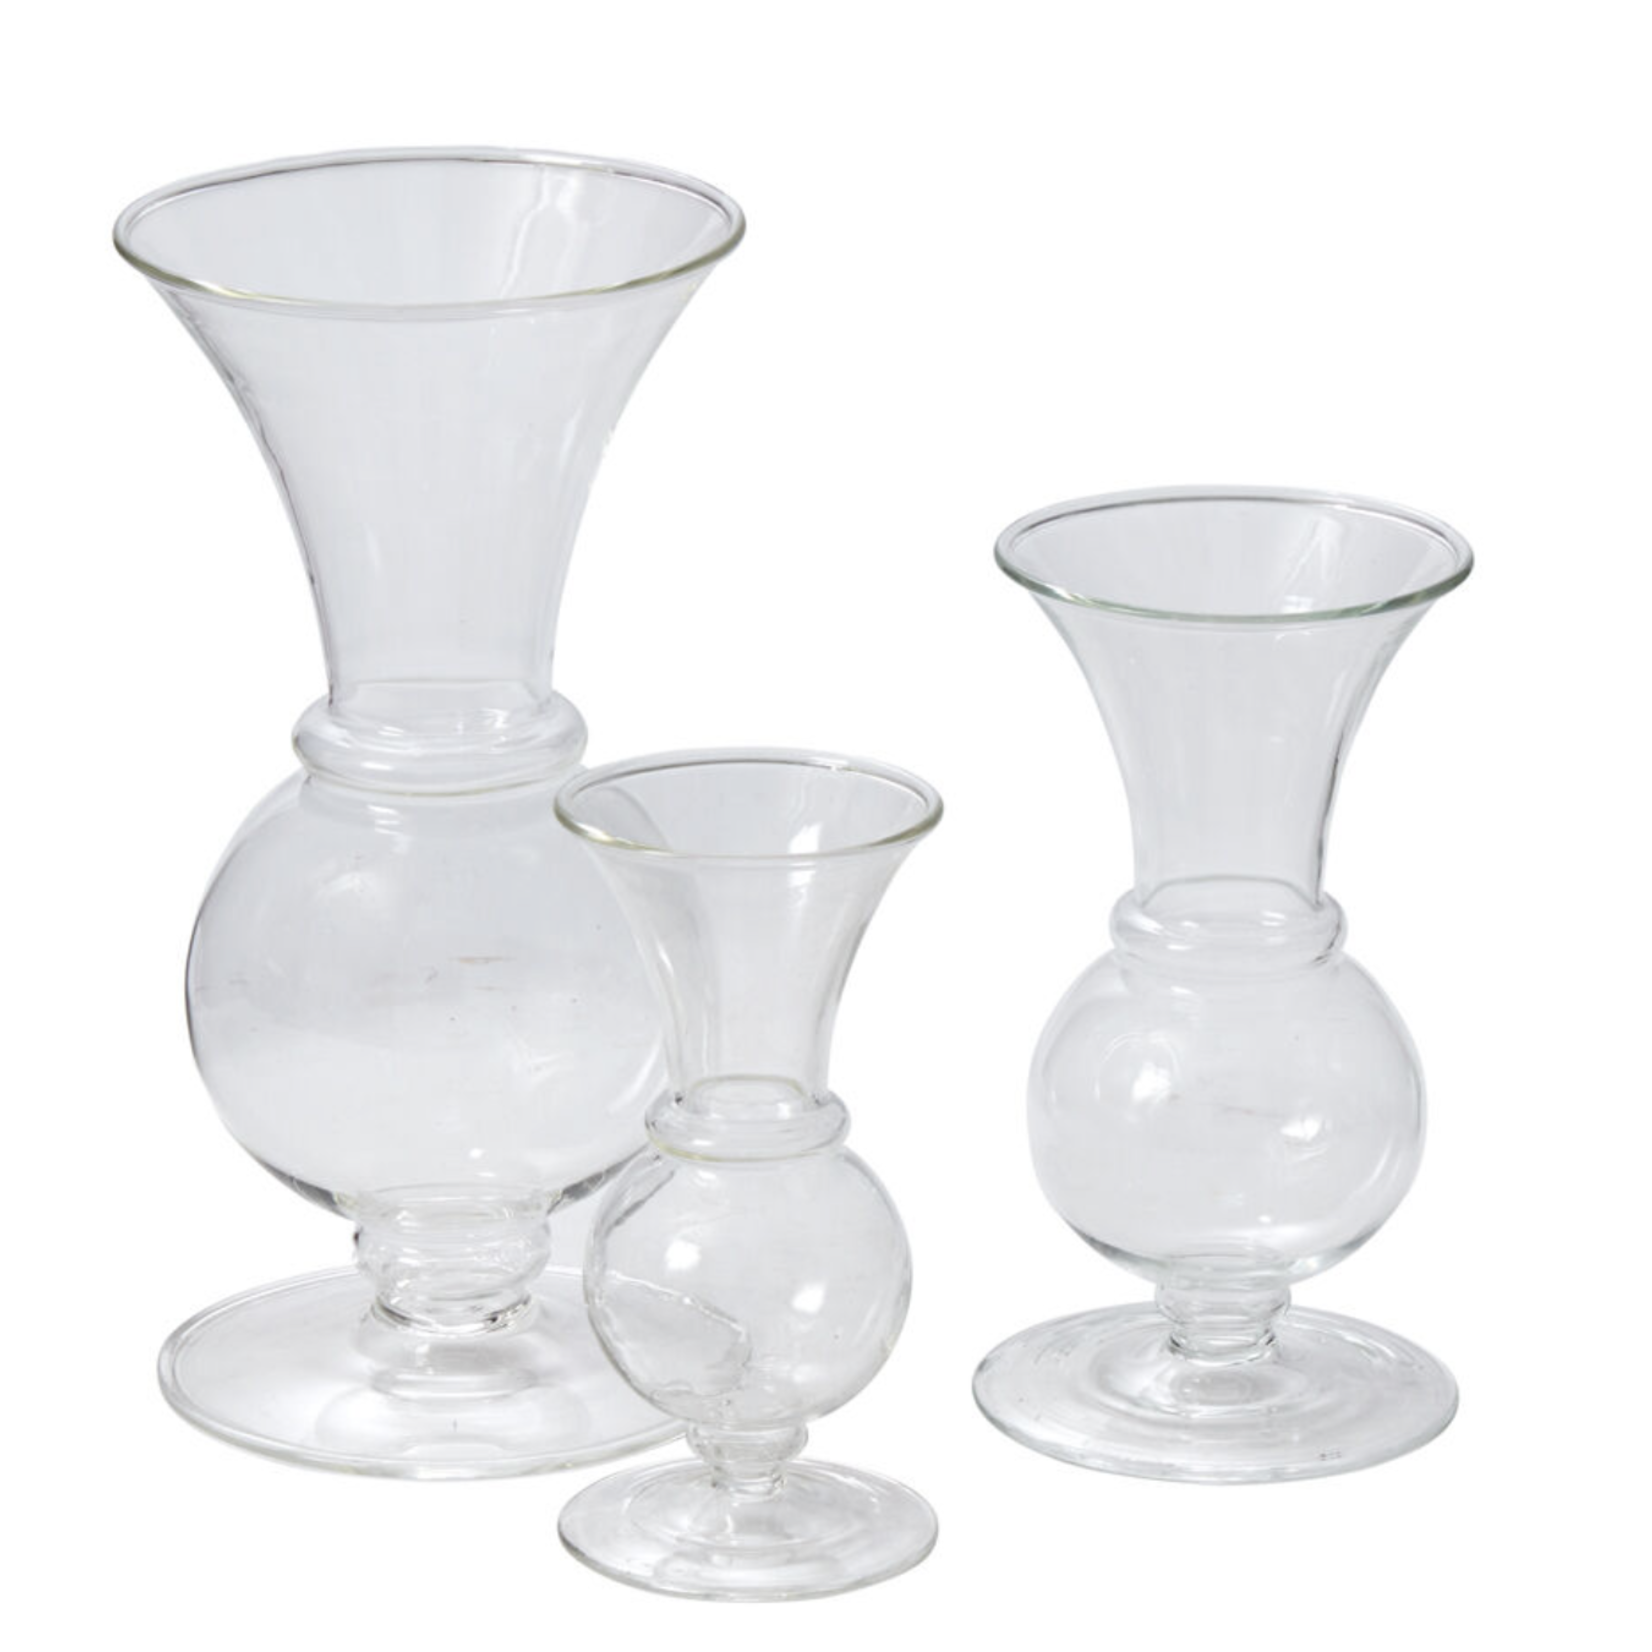 6”H X 3.25” CLEAR GLASS QUEENSLAND BUDVASE